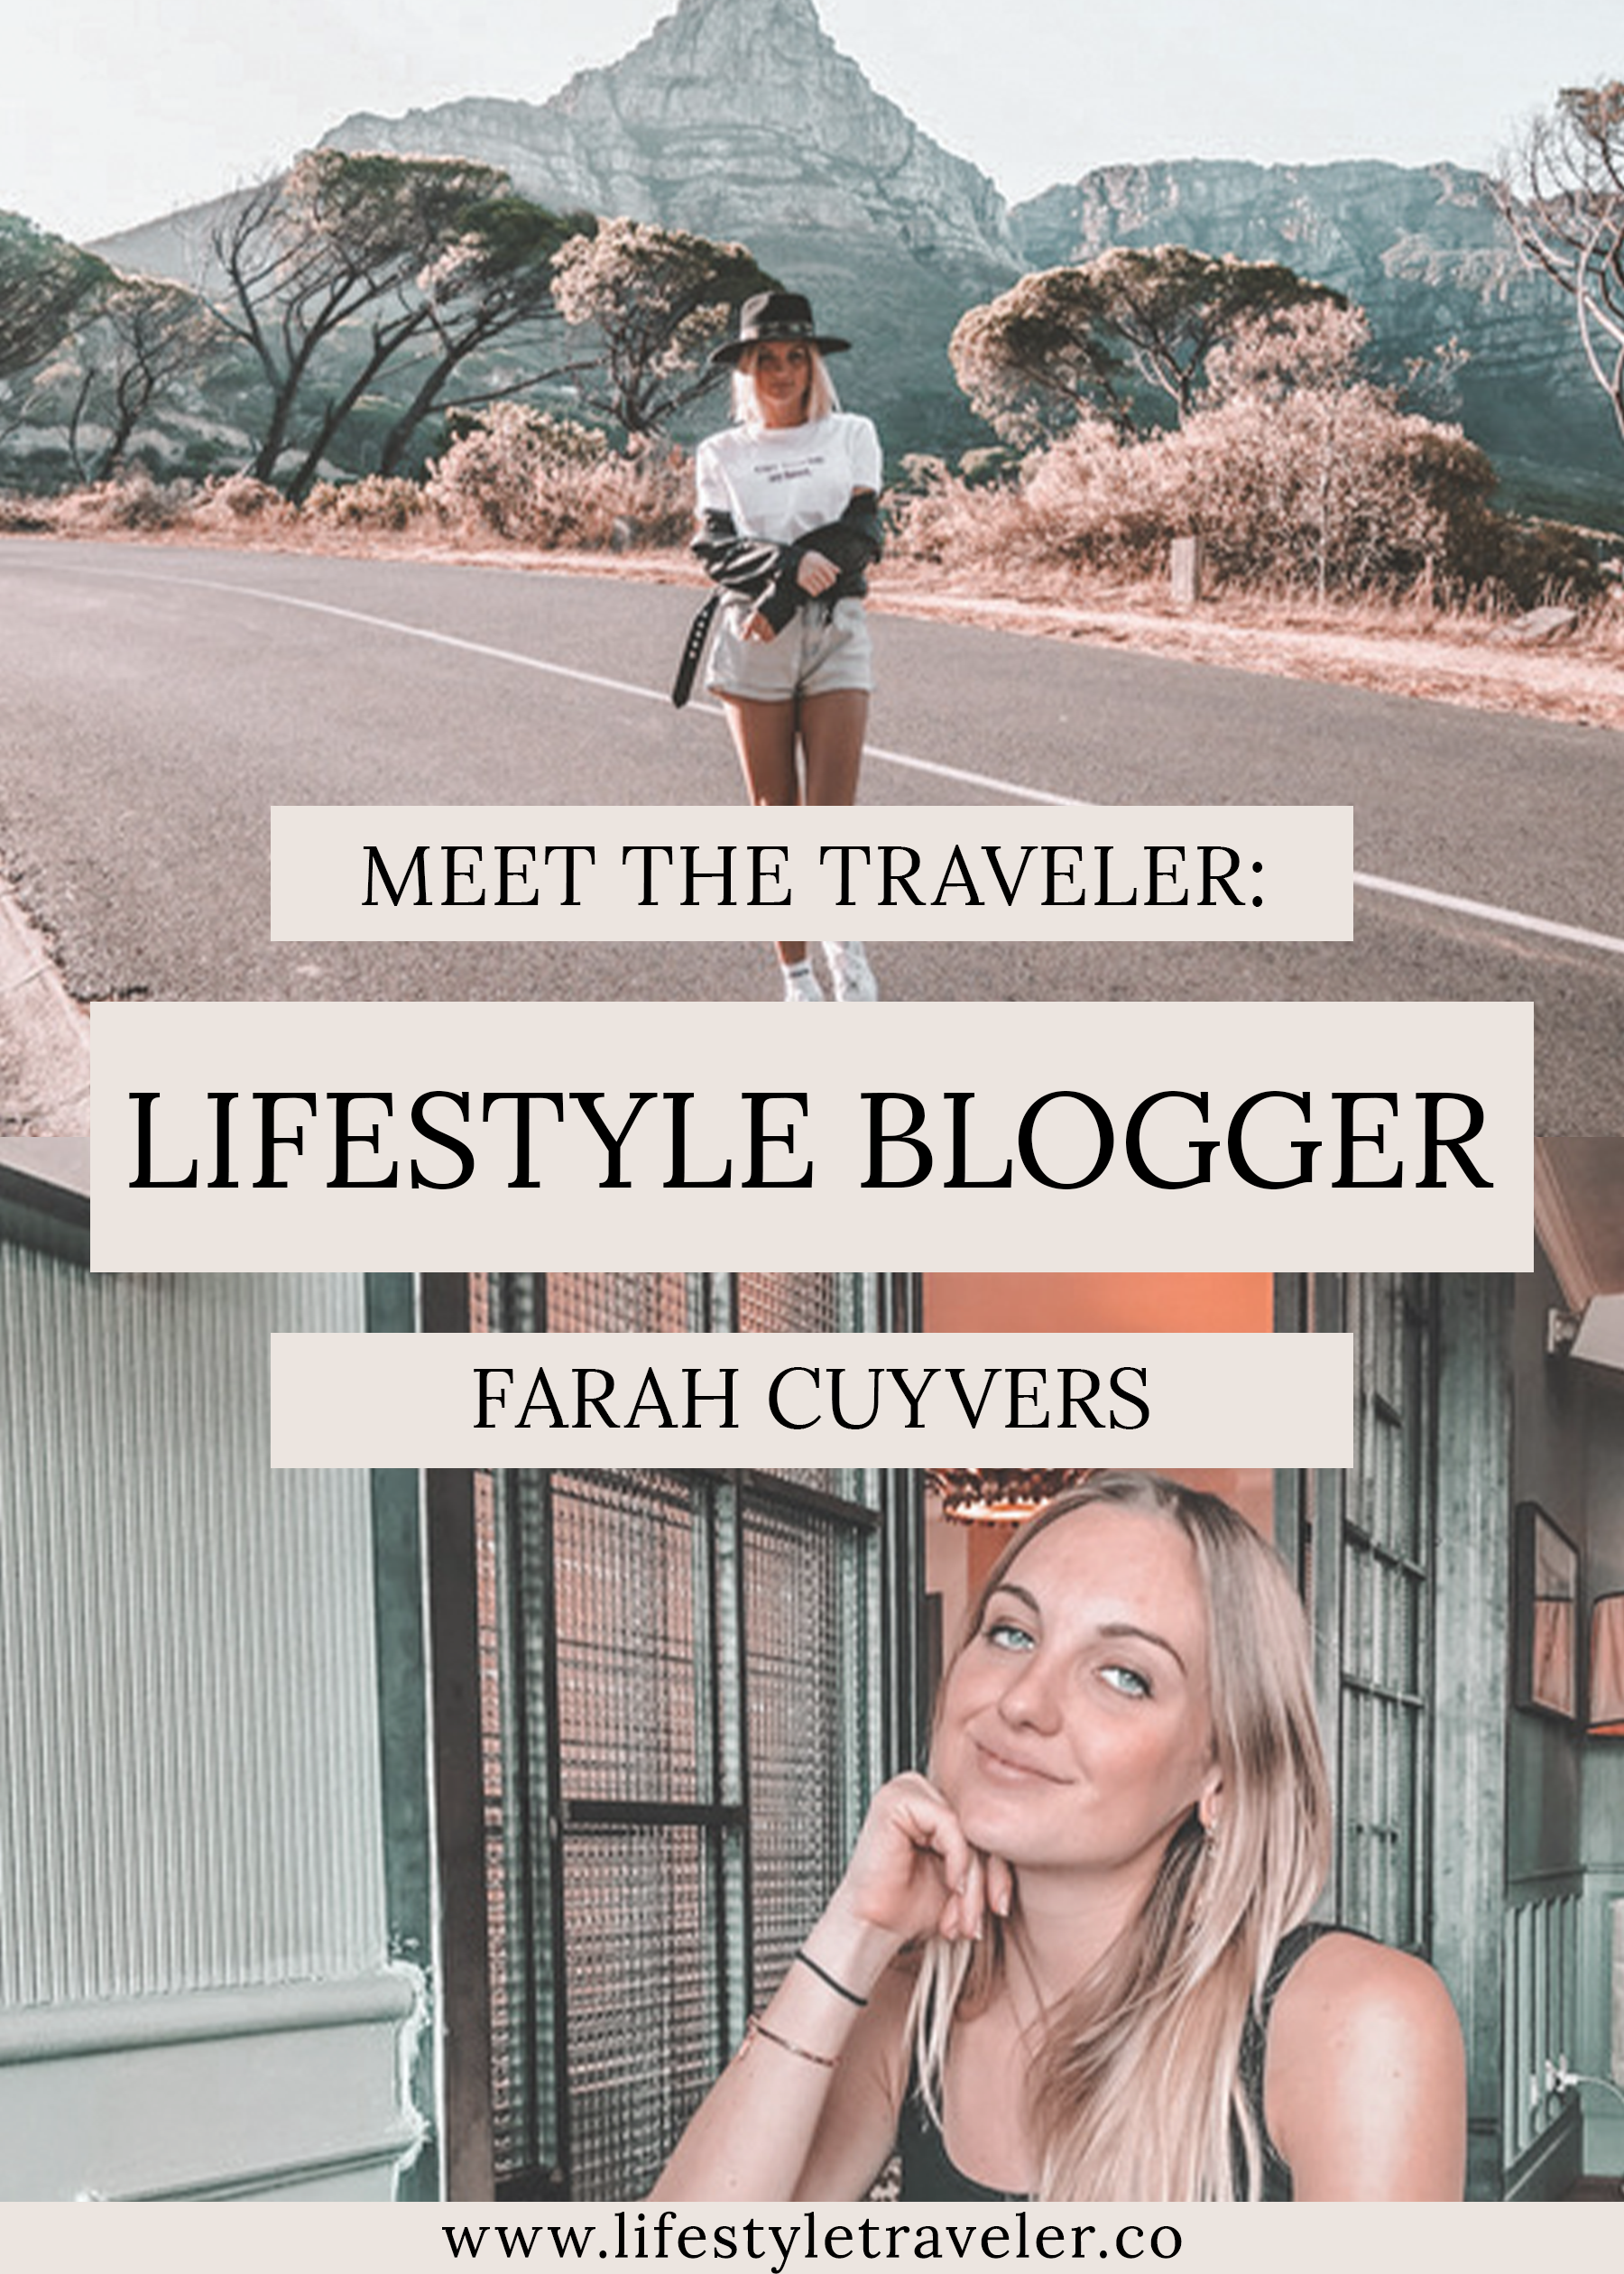 Meet The Traveler: Lifestyle Blogger Farah Cuyvers | lifestyletraveler.co | IG: @lifestyletraveler.co | Photo by: Farah Cuyvers